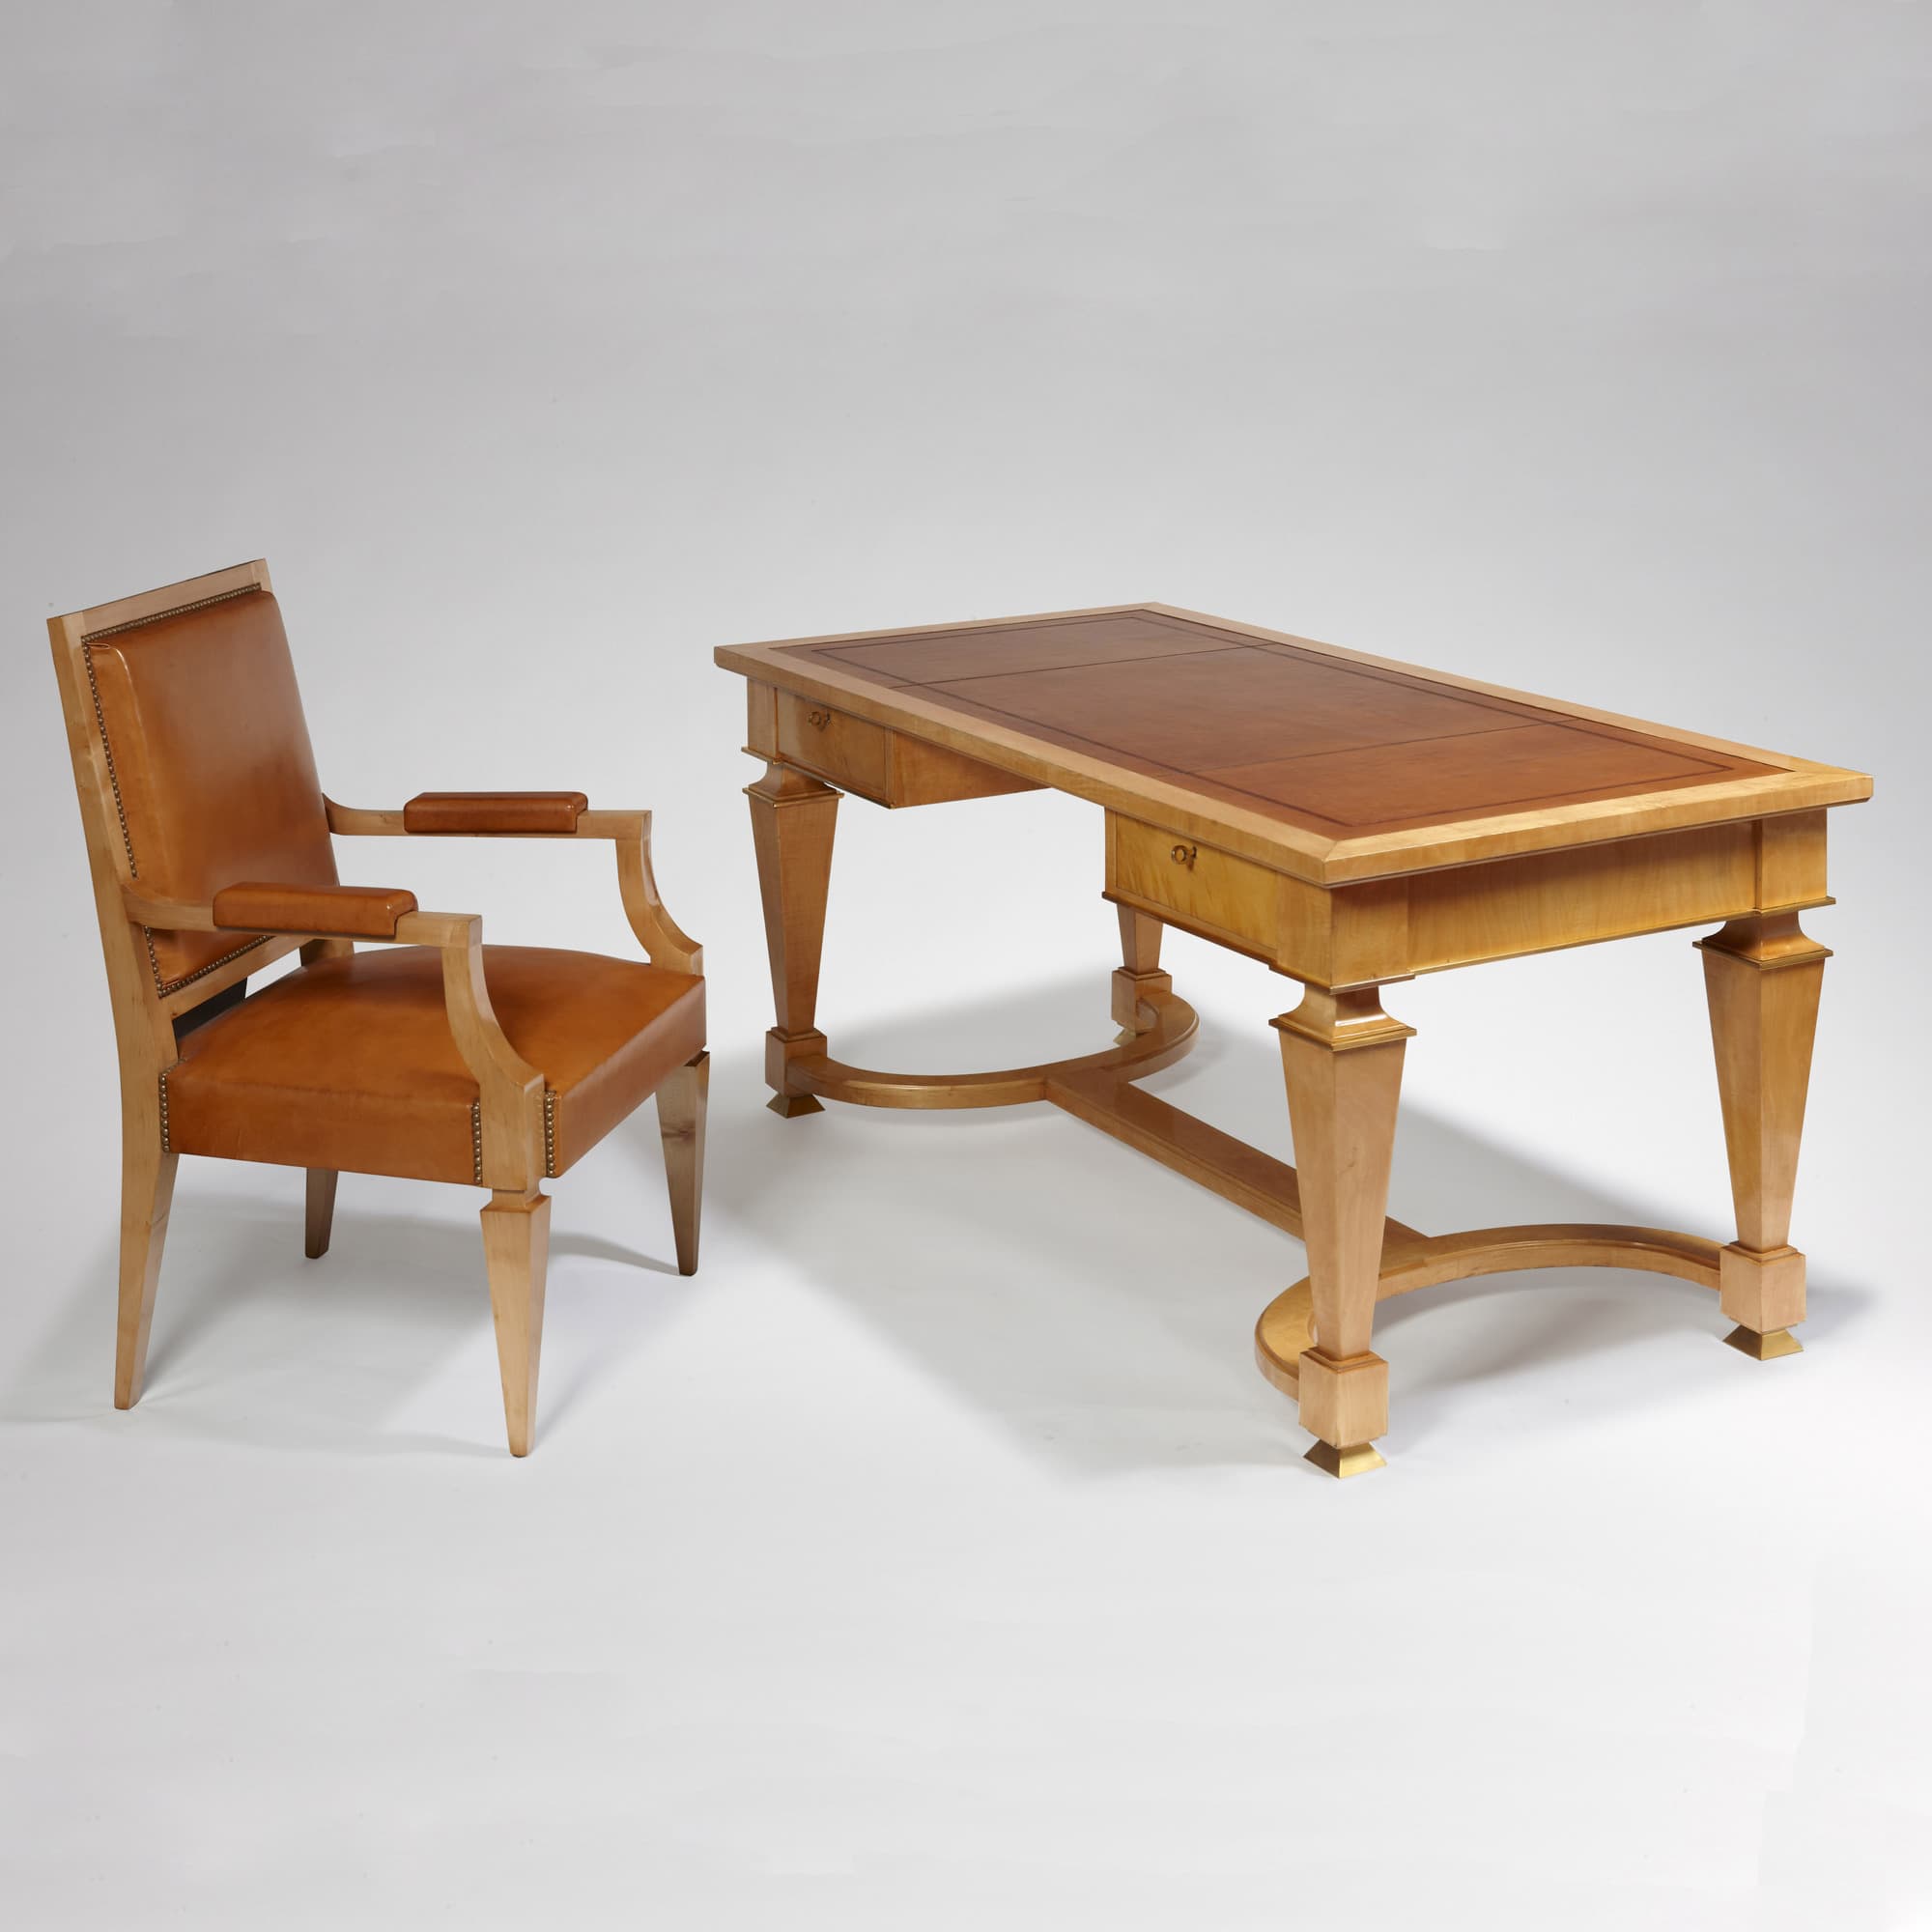 André Arbus, Desk and its armchair, vue 01